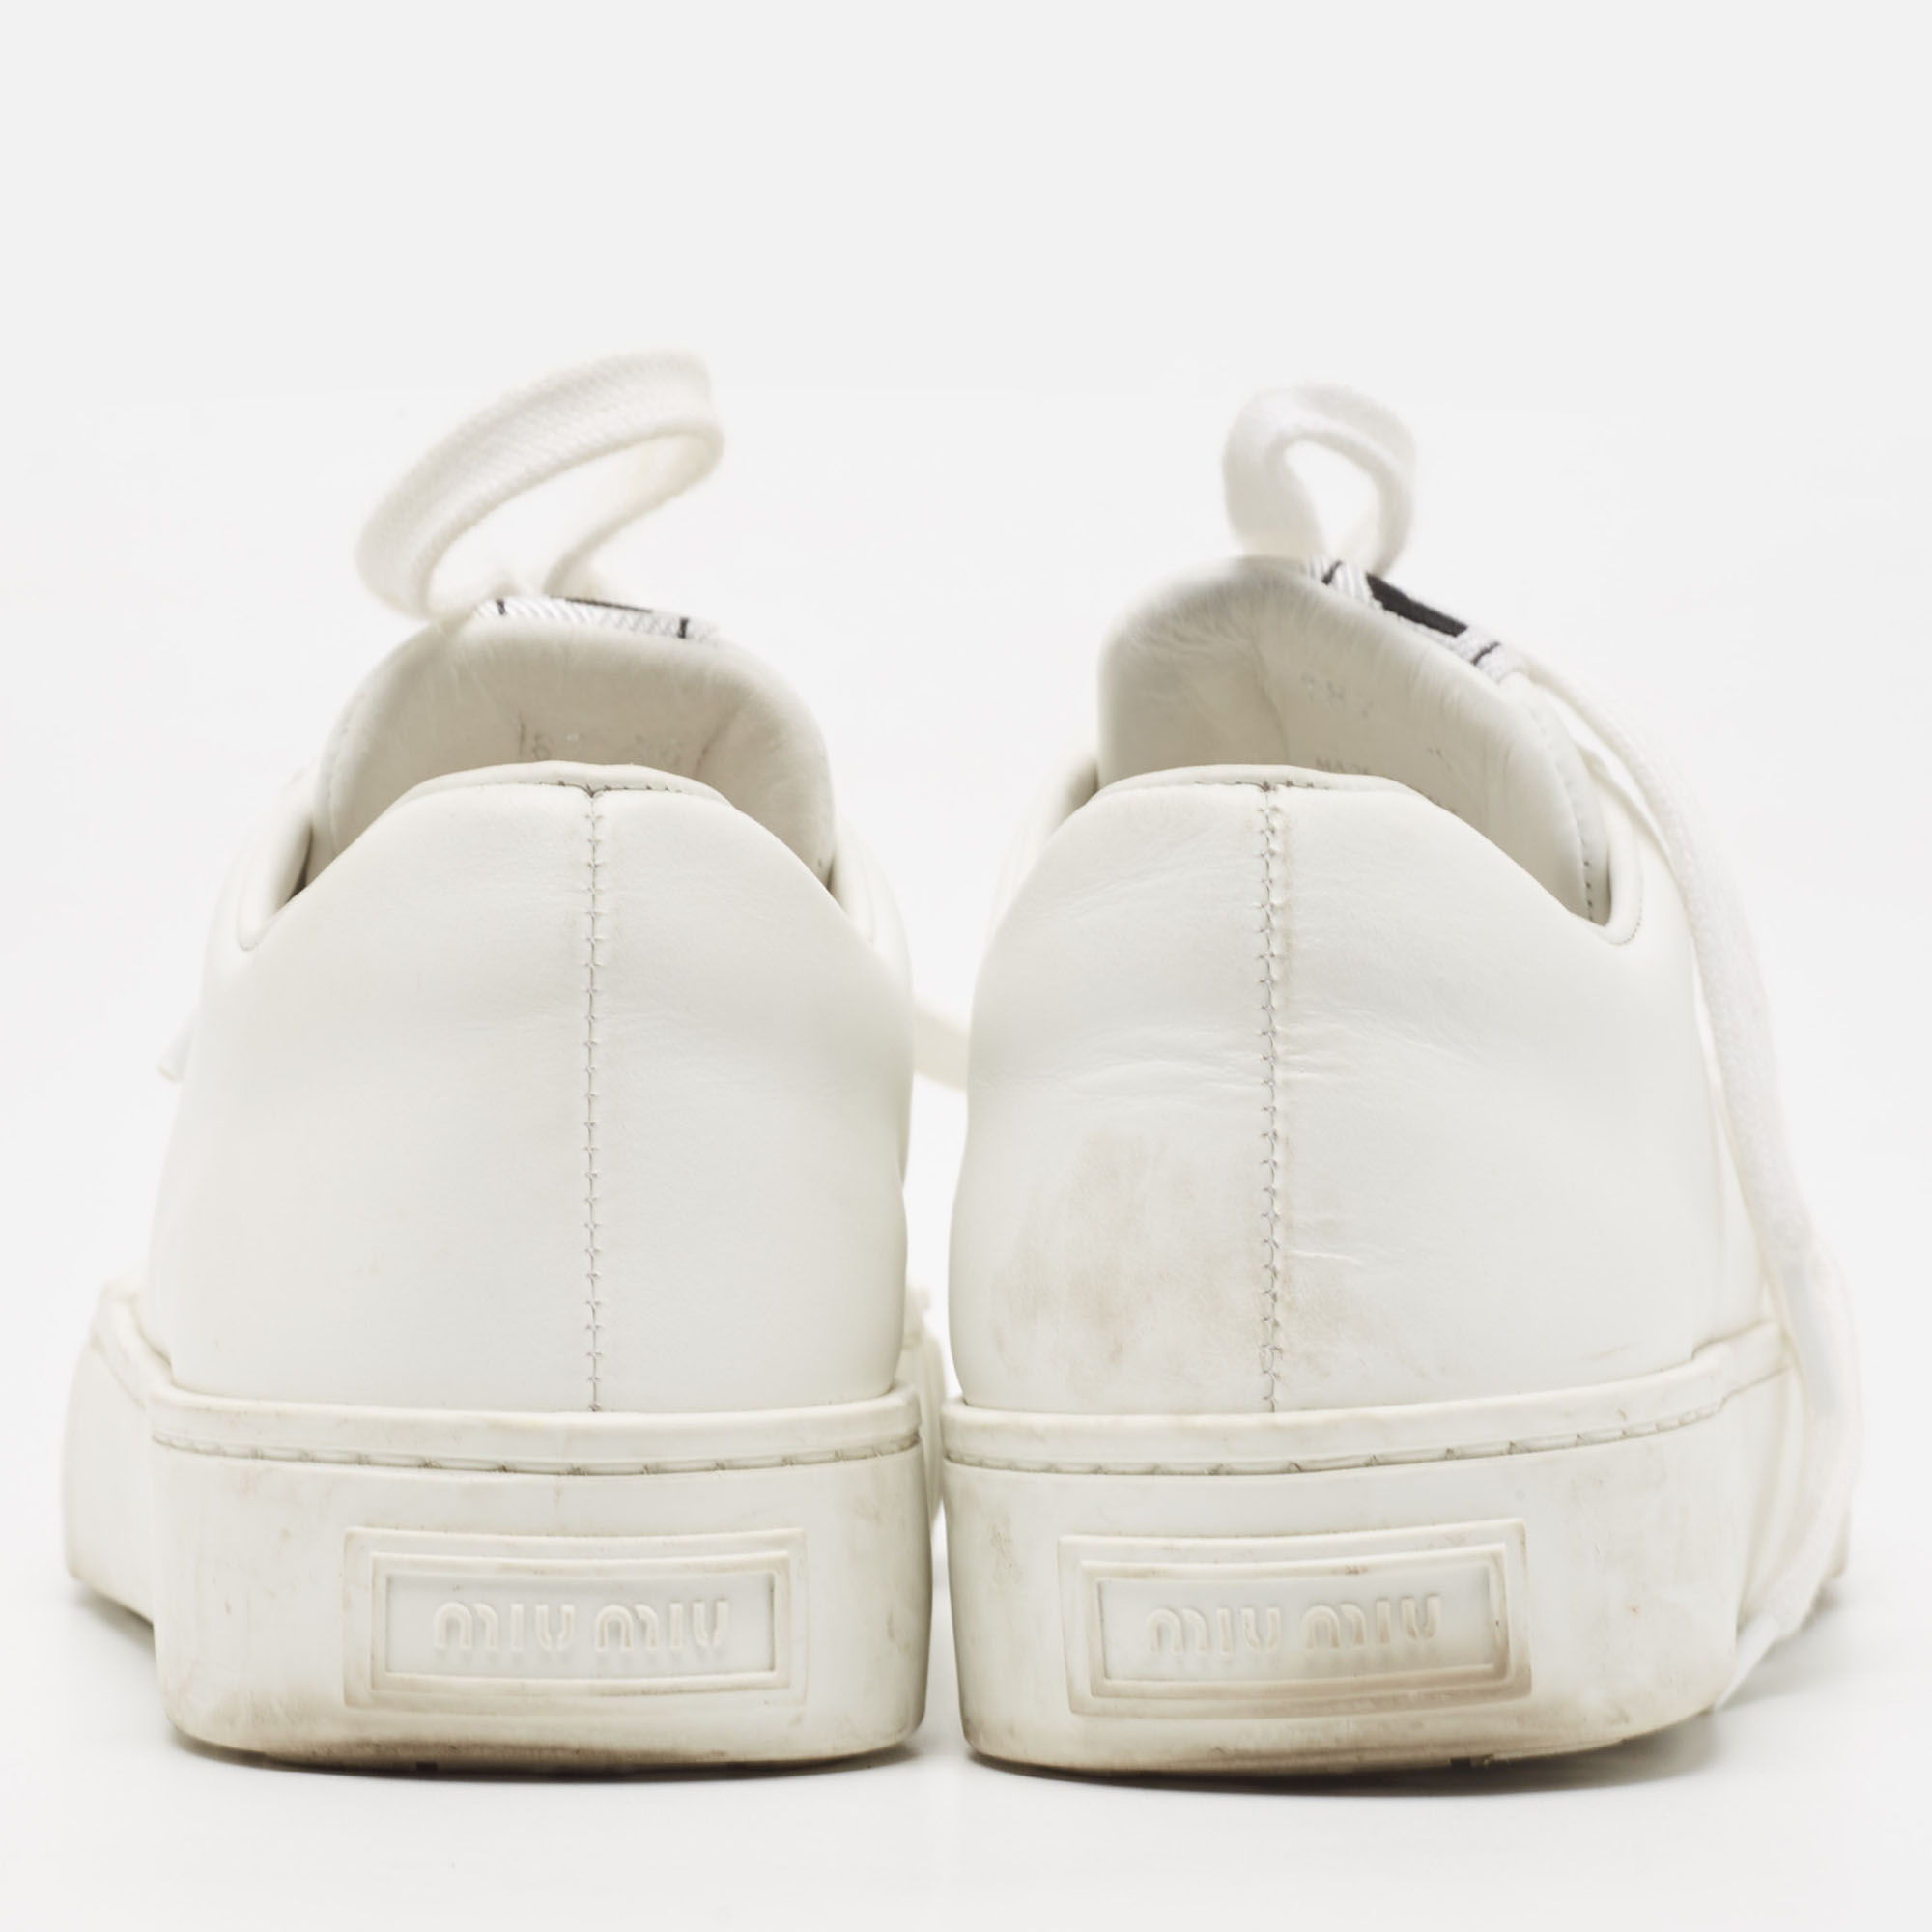 Miu Miu White Leather Low Top Sneakers Size 36